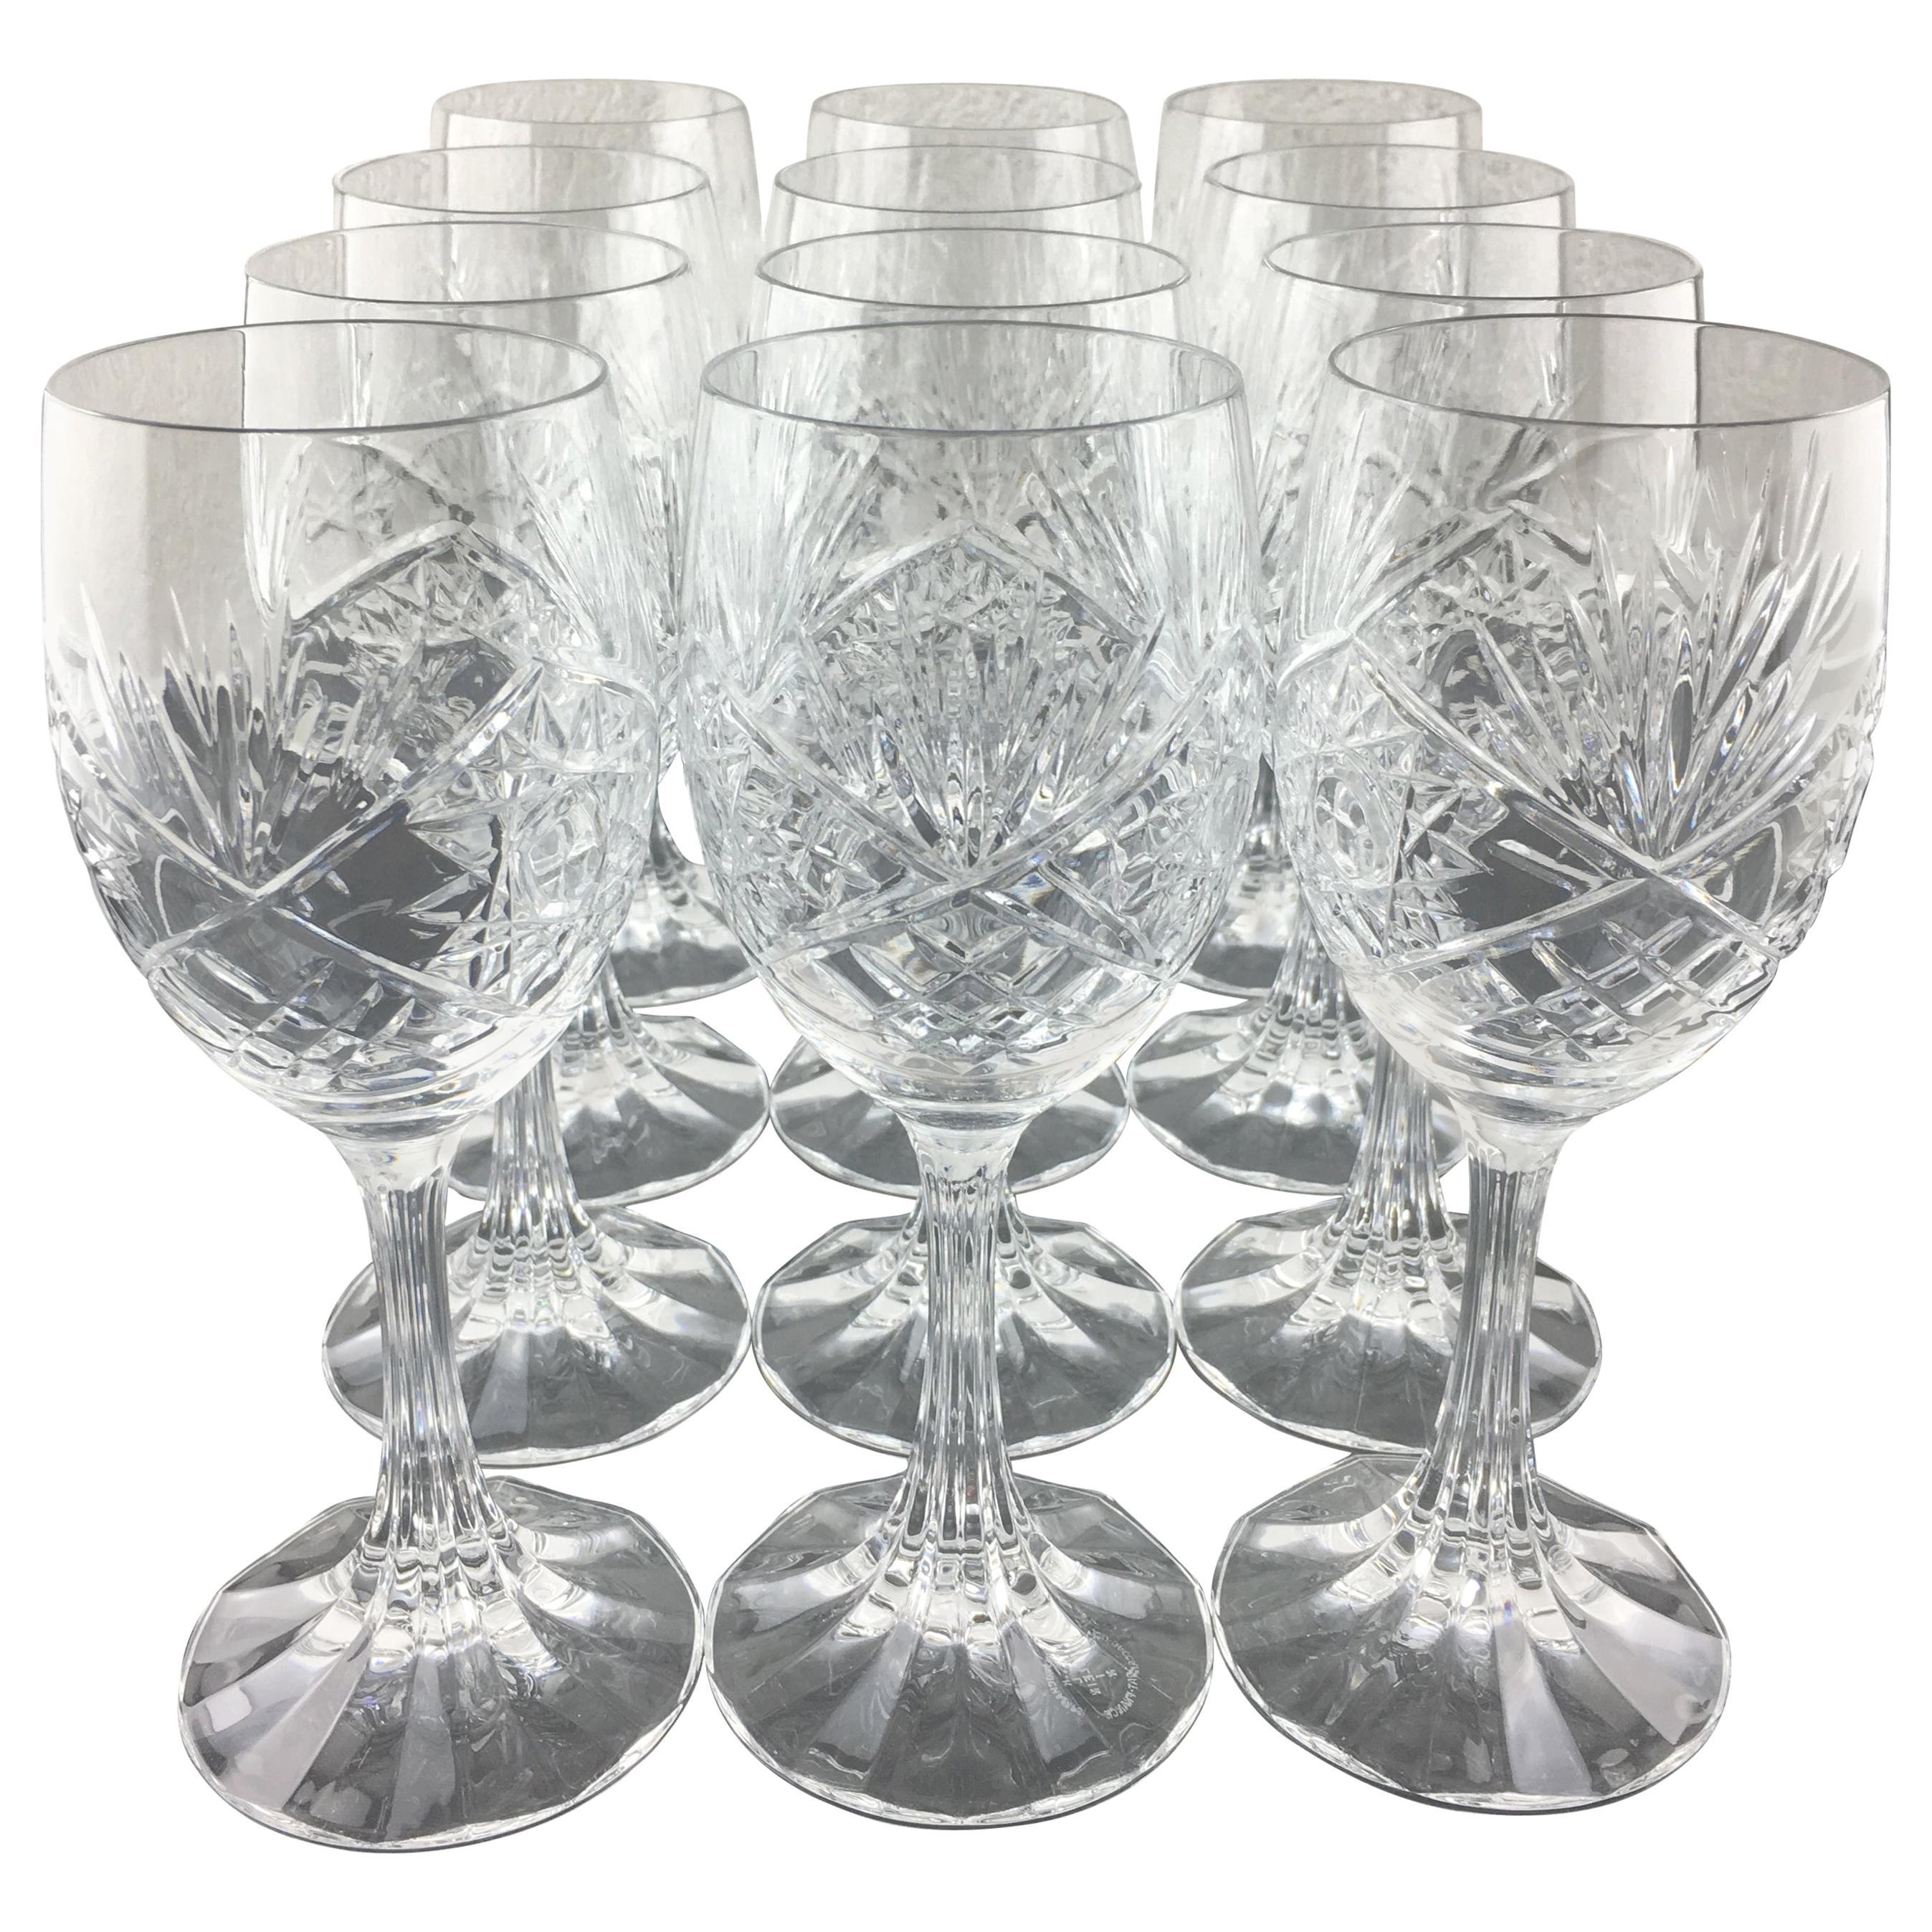 Stunning Set of 12 Baccarat Crystal Wine Glasses